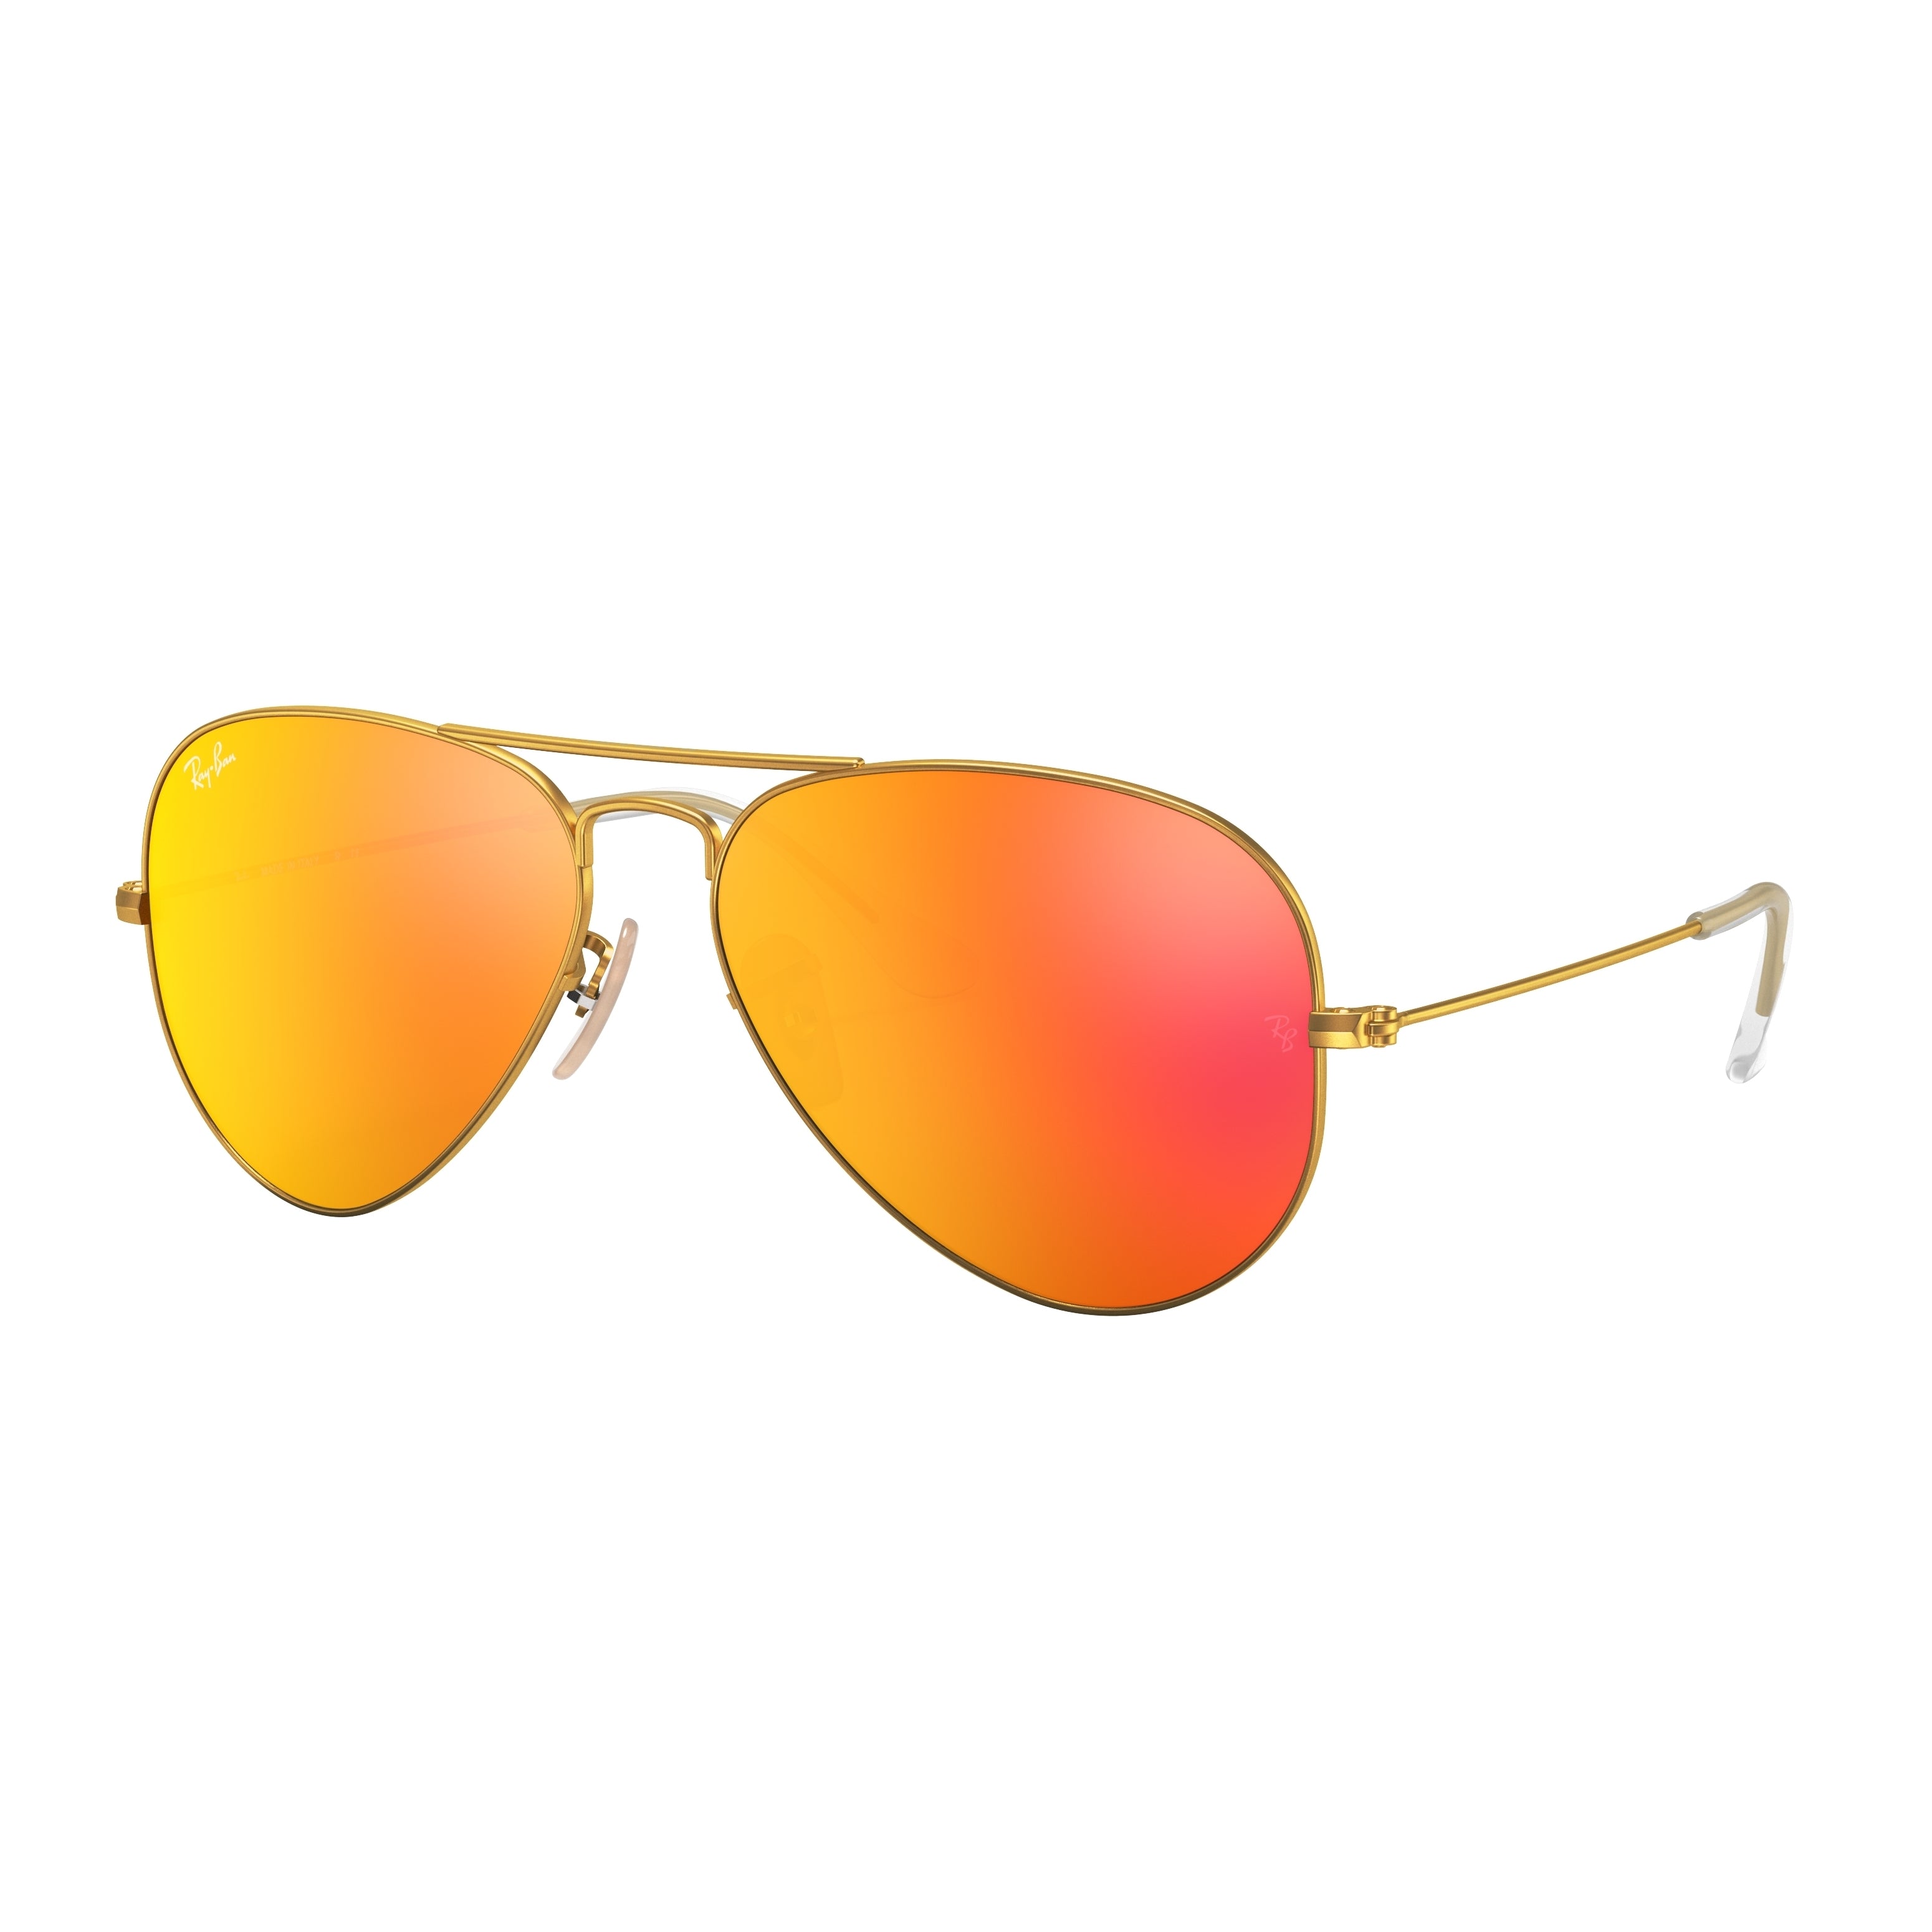 Ray-Ban Ray-Ban Aviator Flash Lenses Orange Flash Pilot Unisex Sunglasses RB3025 112/69 62